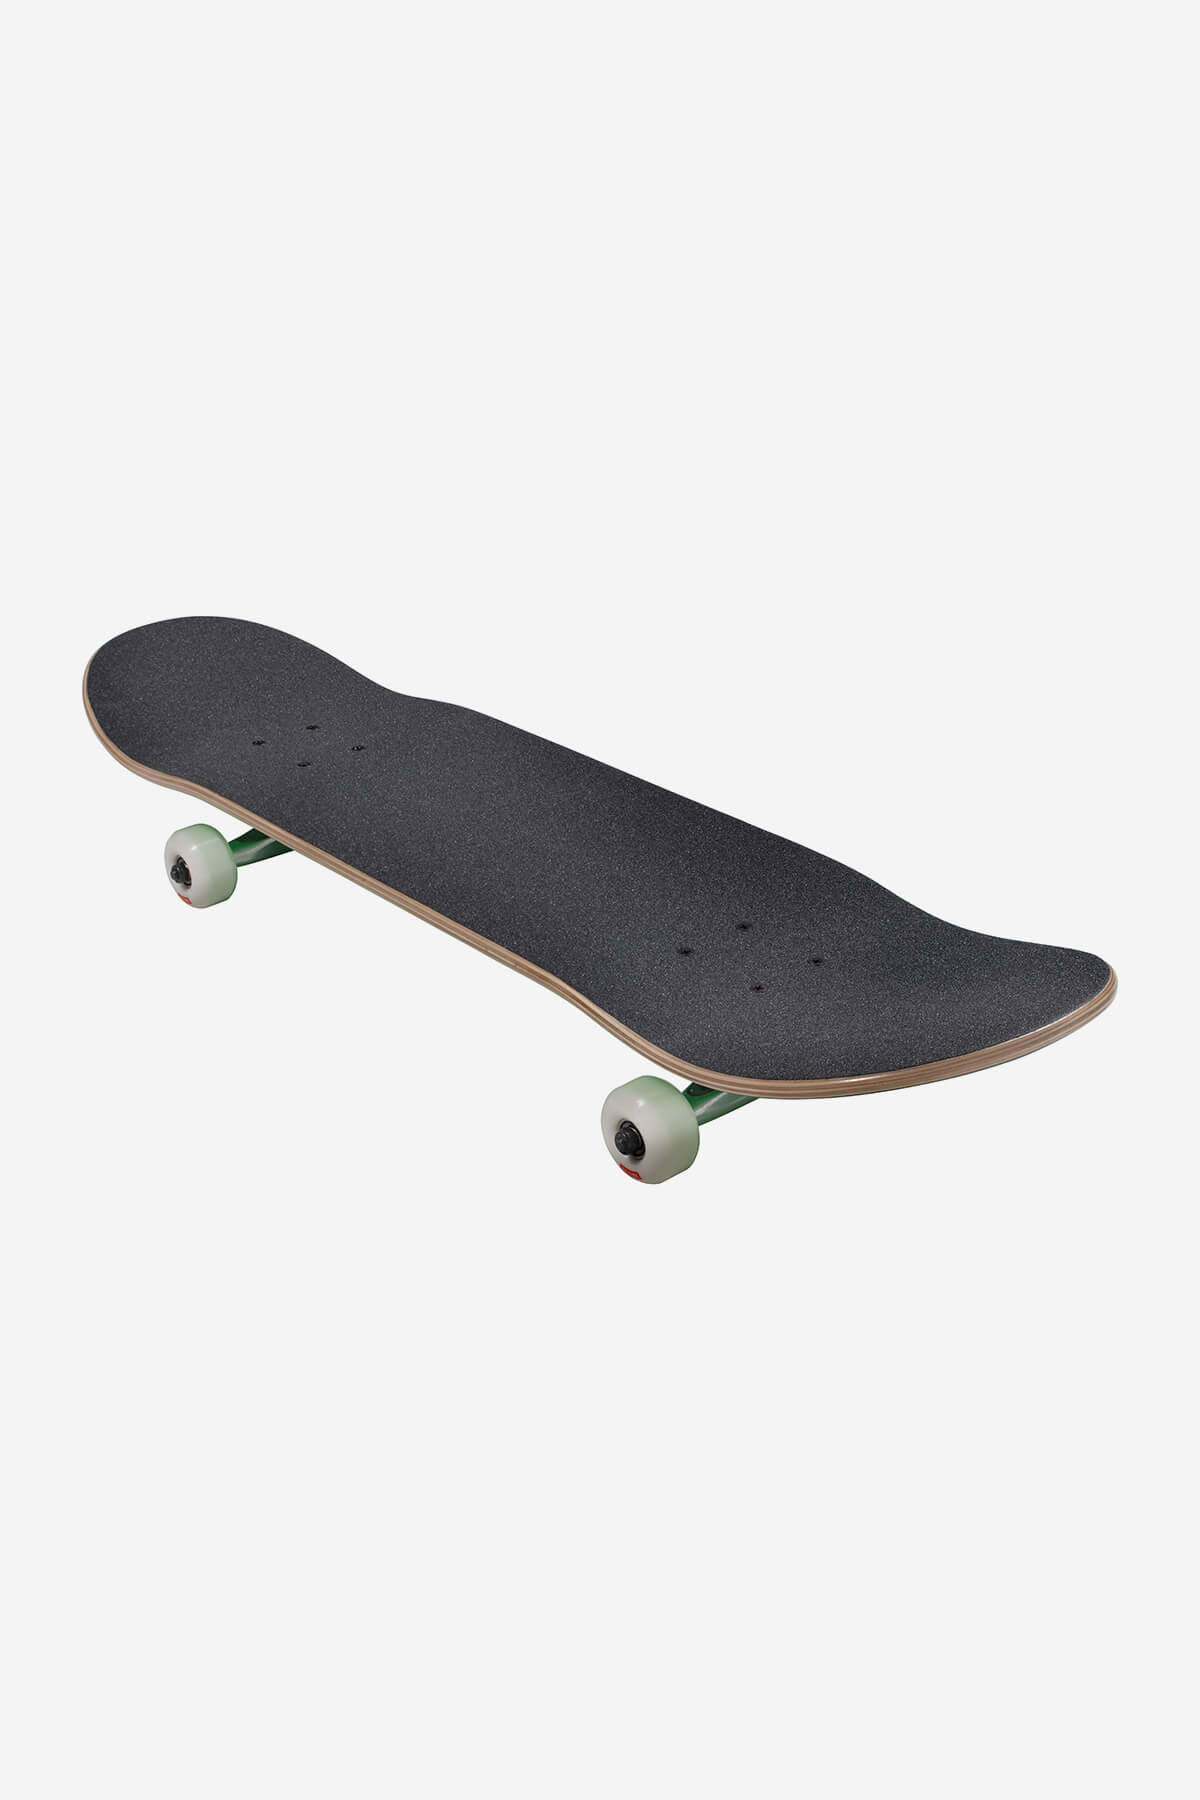 Globe - Goodstock - Neon Green - 8.0" Complete Skateboard